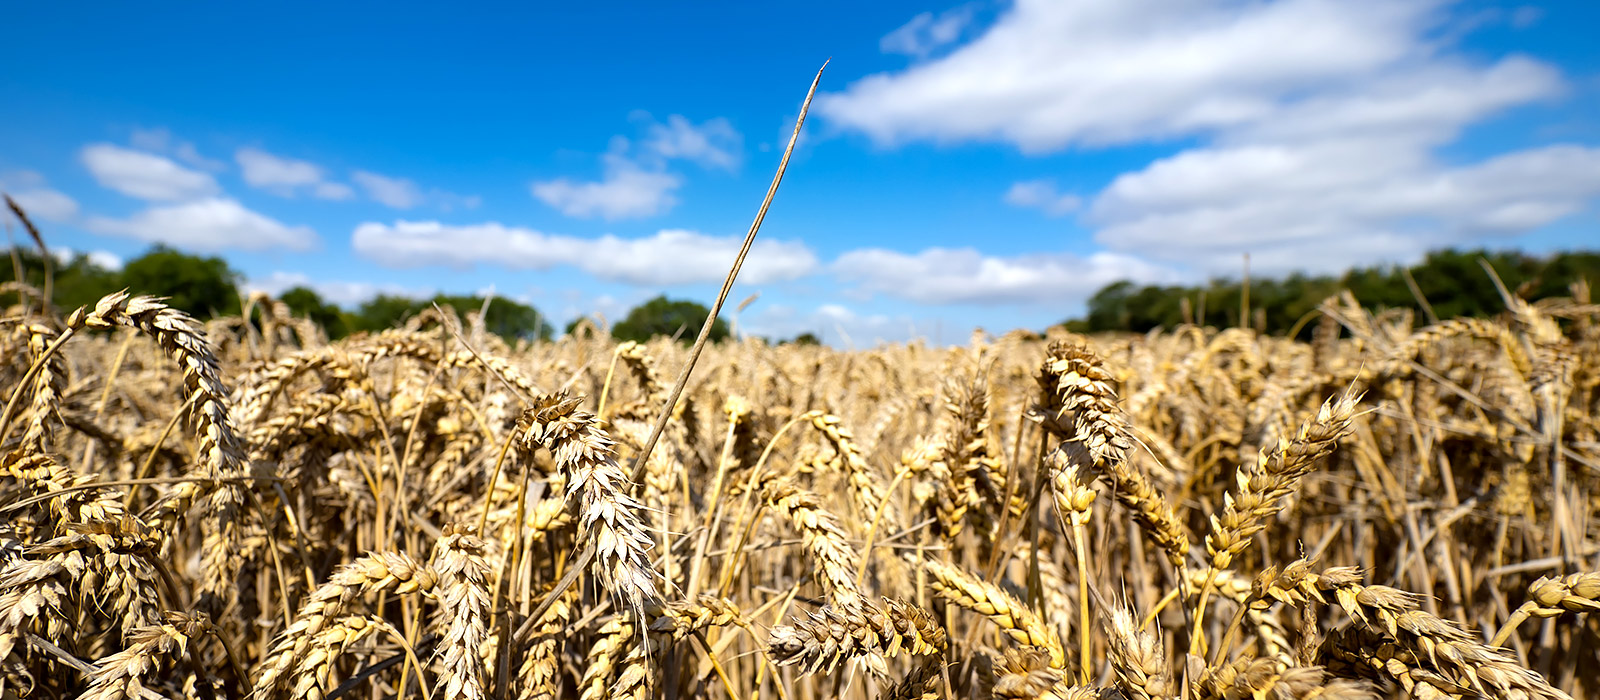 A wheat field underneath a bright blue sky